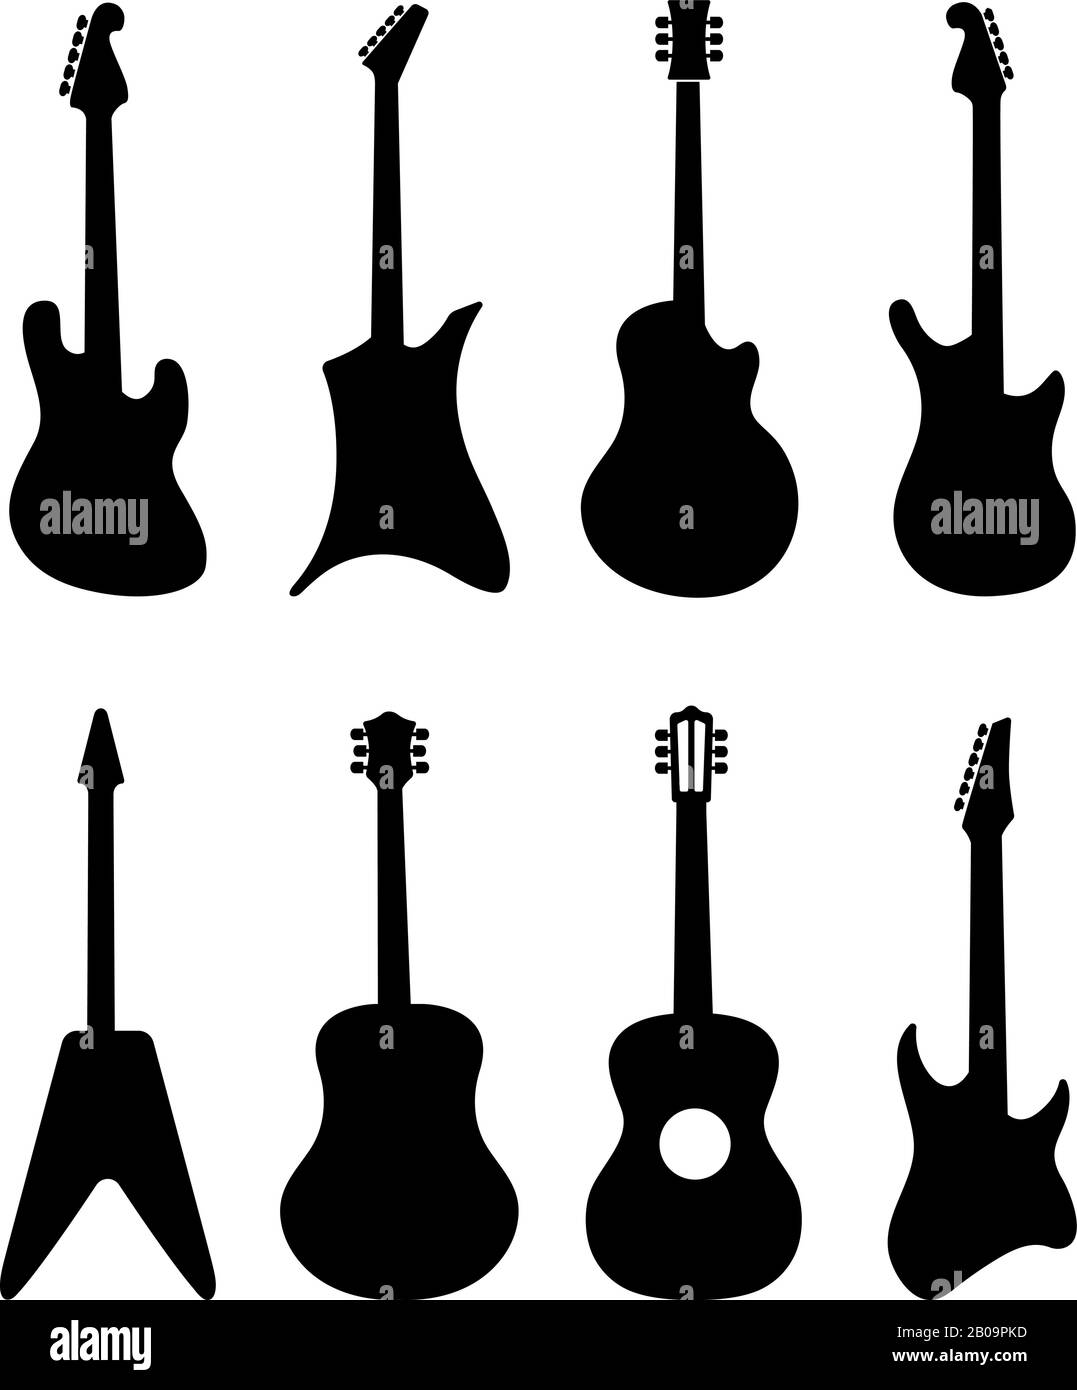 Gitarrenvektor-Silhouetten. Rock, Akustik, E-Gitarren. Schwarze Silhouette  der Rockgitarre, Illustration von Musiksaitengitarren Stock-Vektorgrafik -  Alamy